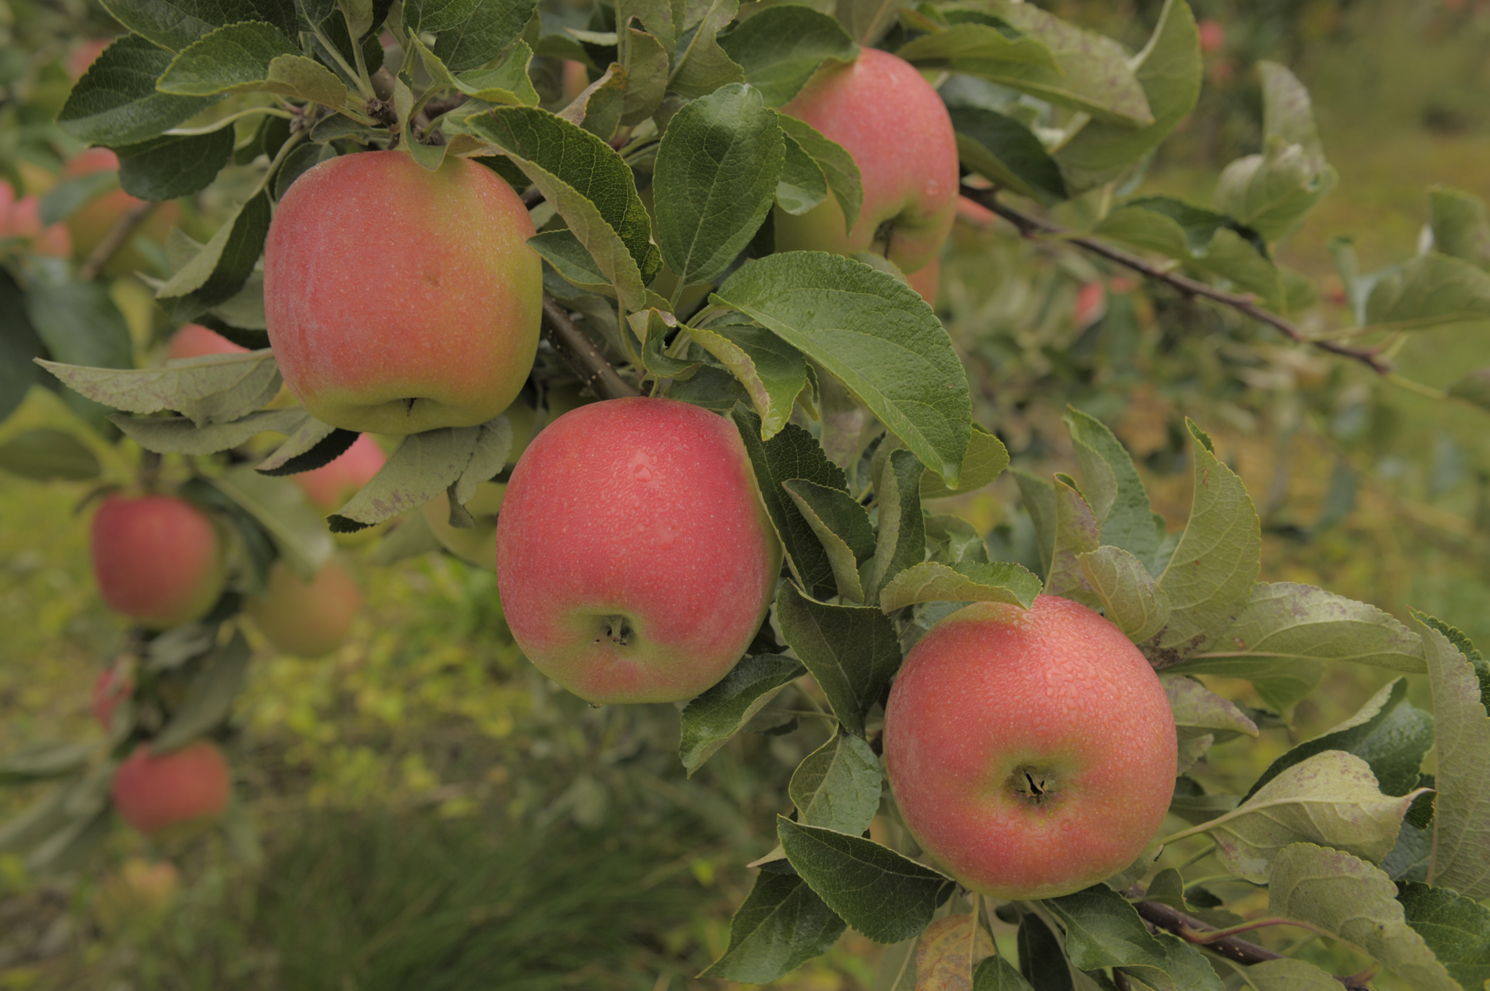 Ontario Apple Growers Slightly smaller Ontario apple crop volume this